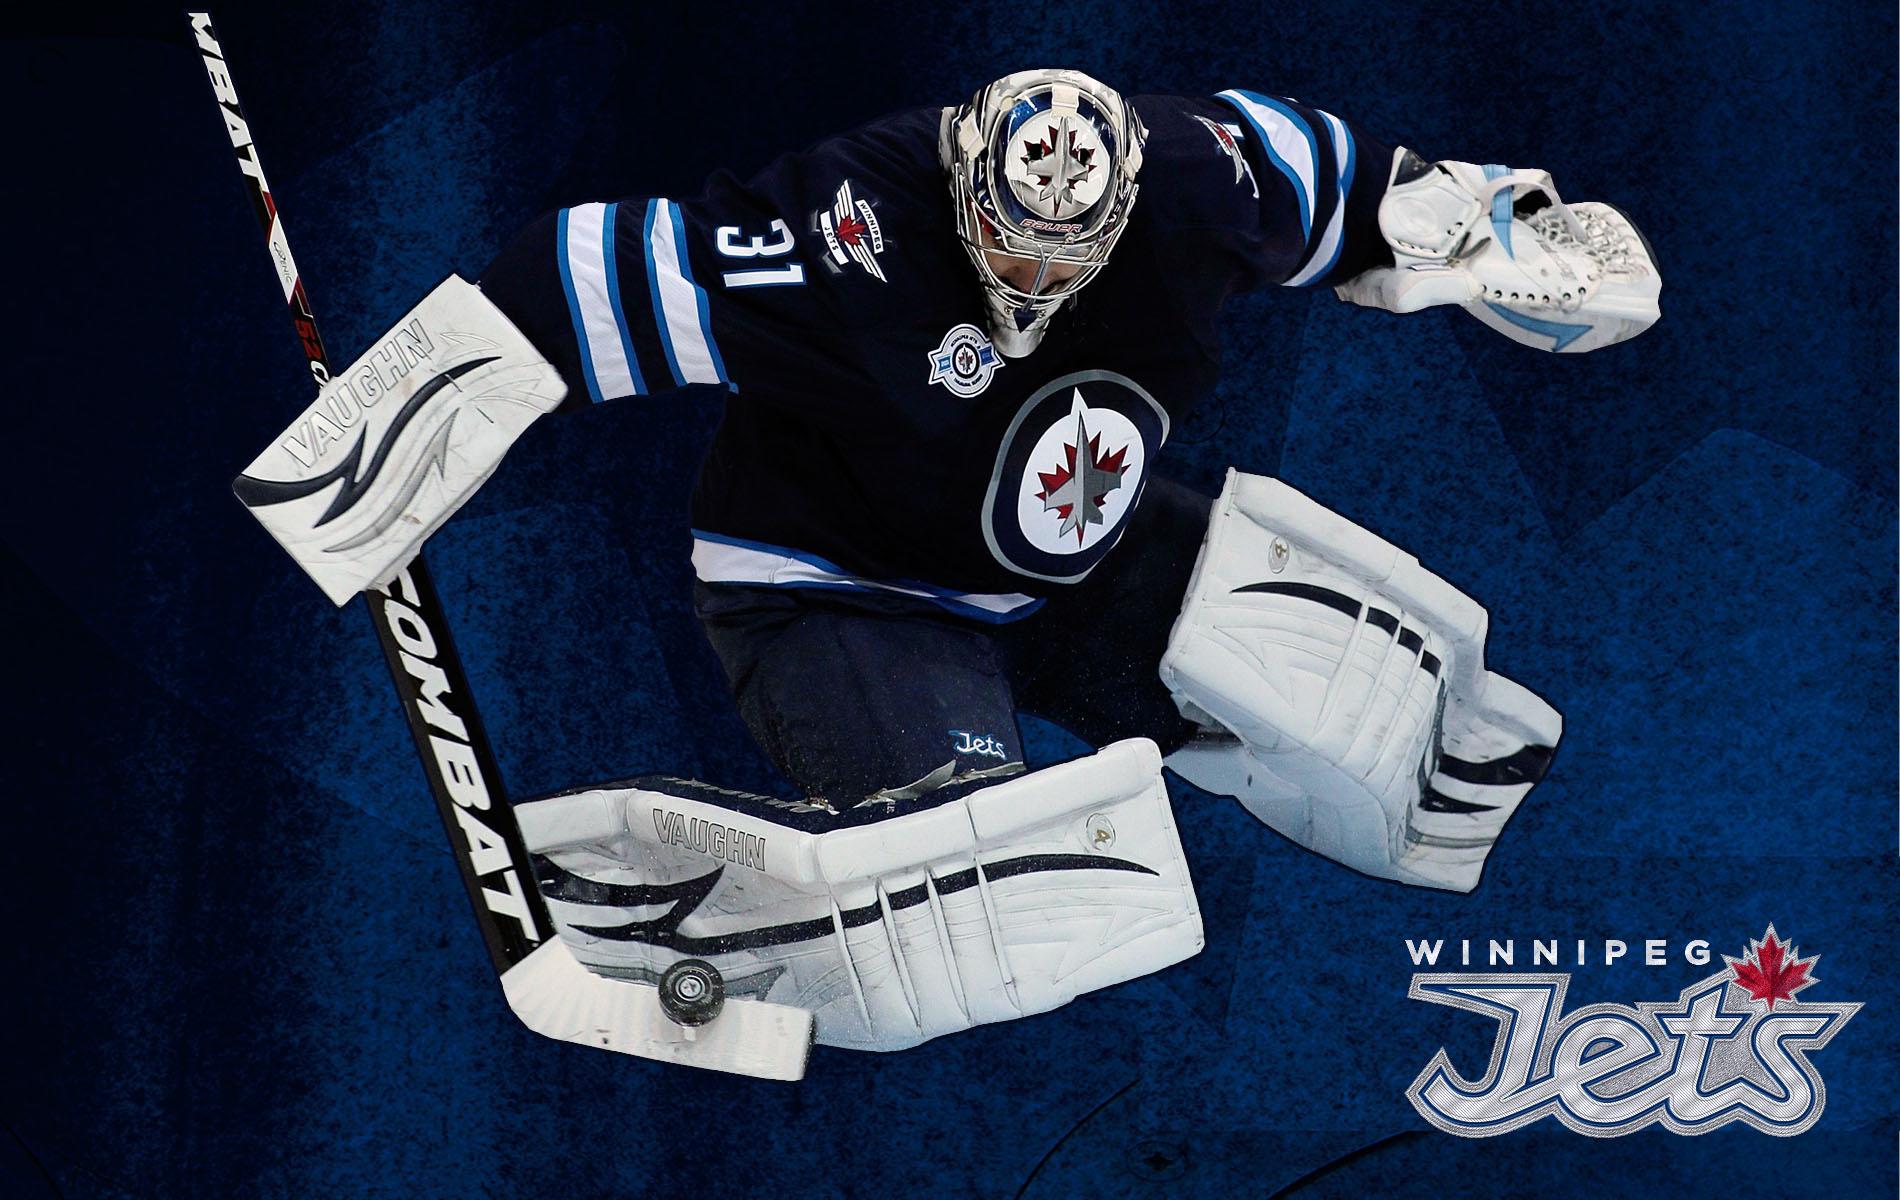 NHL Winnipeg Jets Hockey Player wallpaper 2018 in Hockey